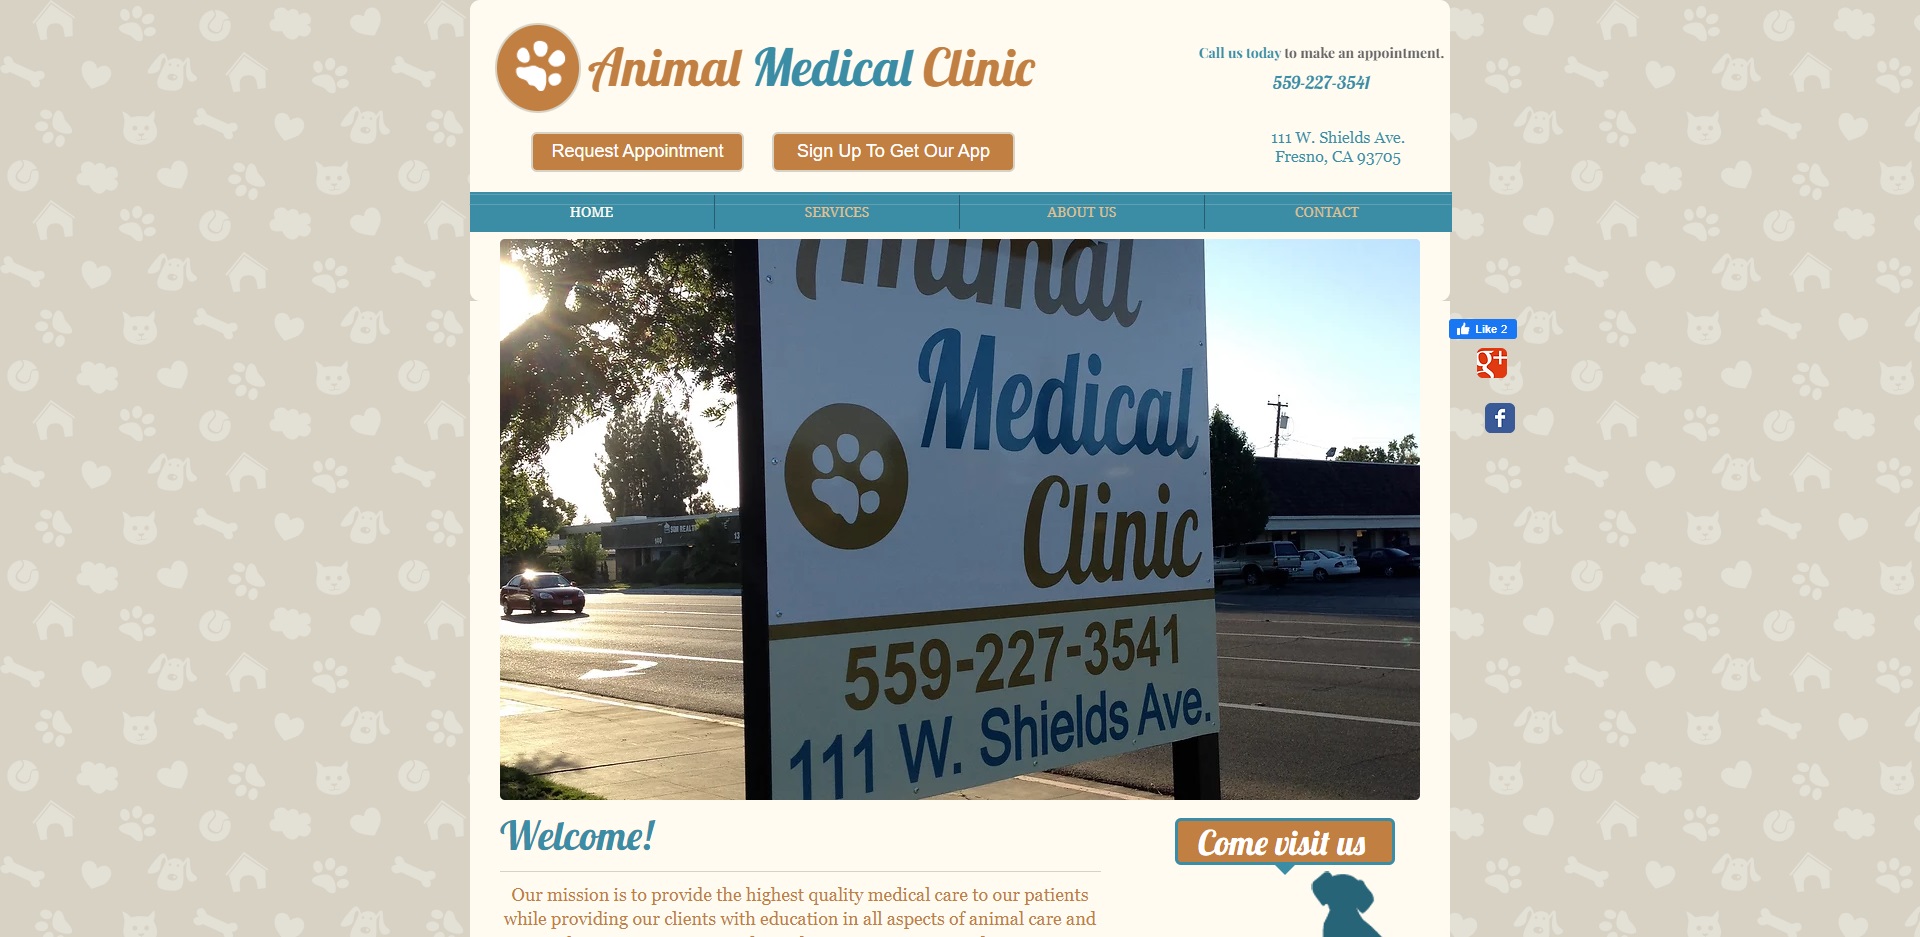 Best Pet Care Centre in Fresno, CA